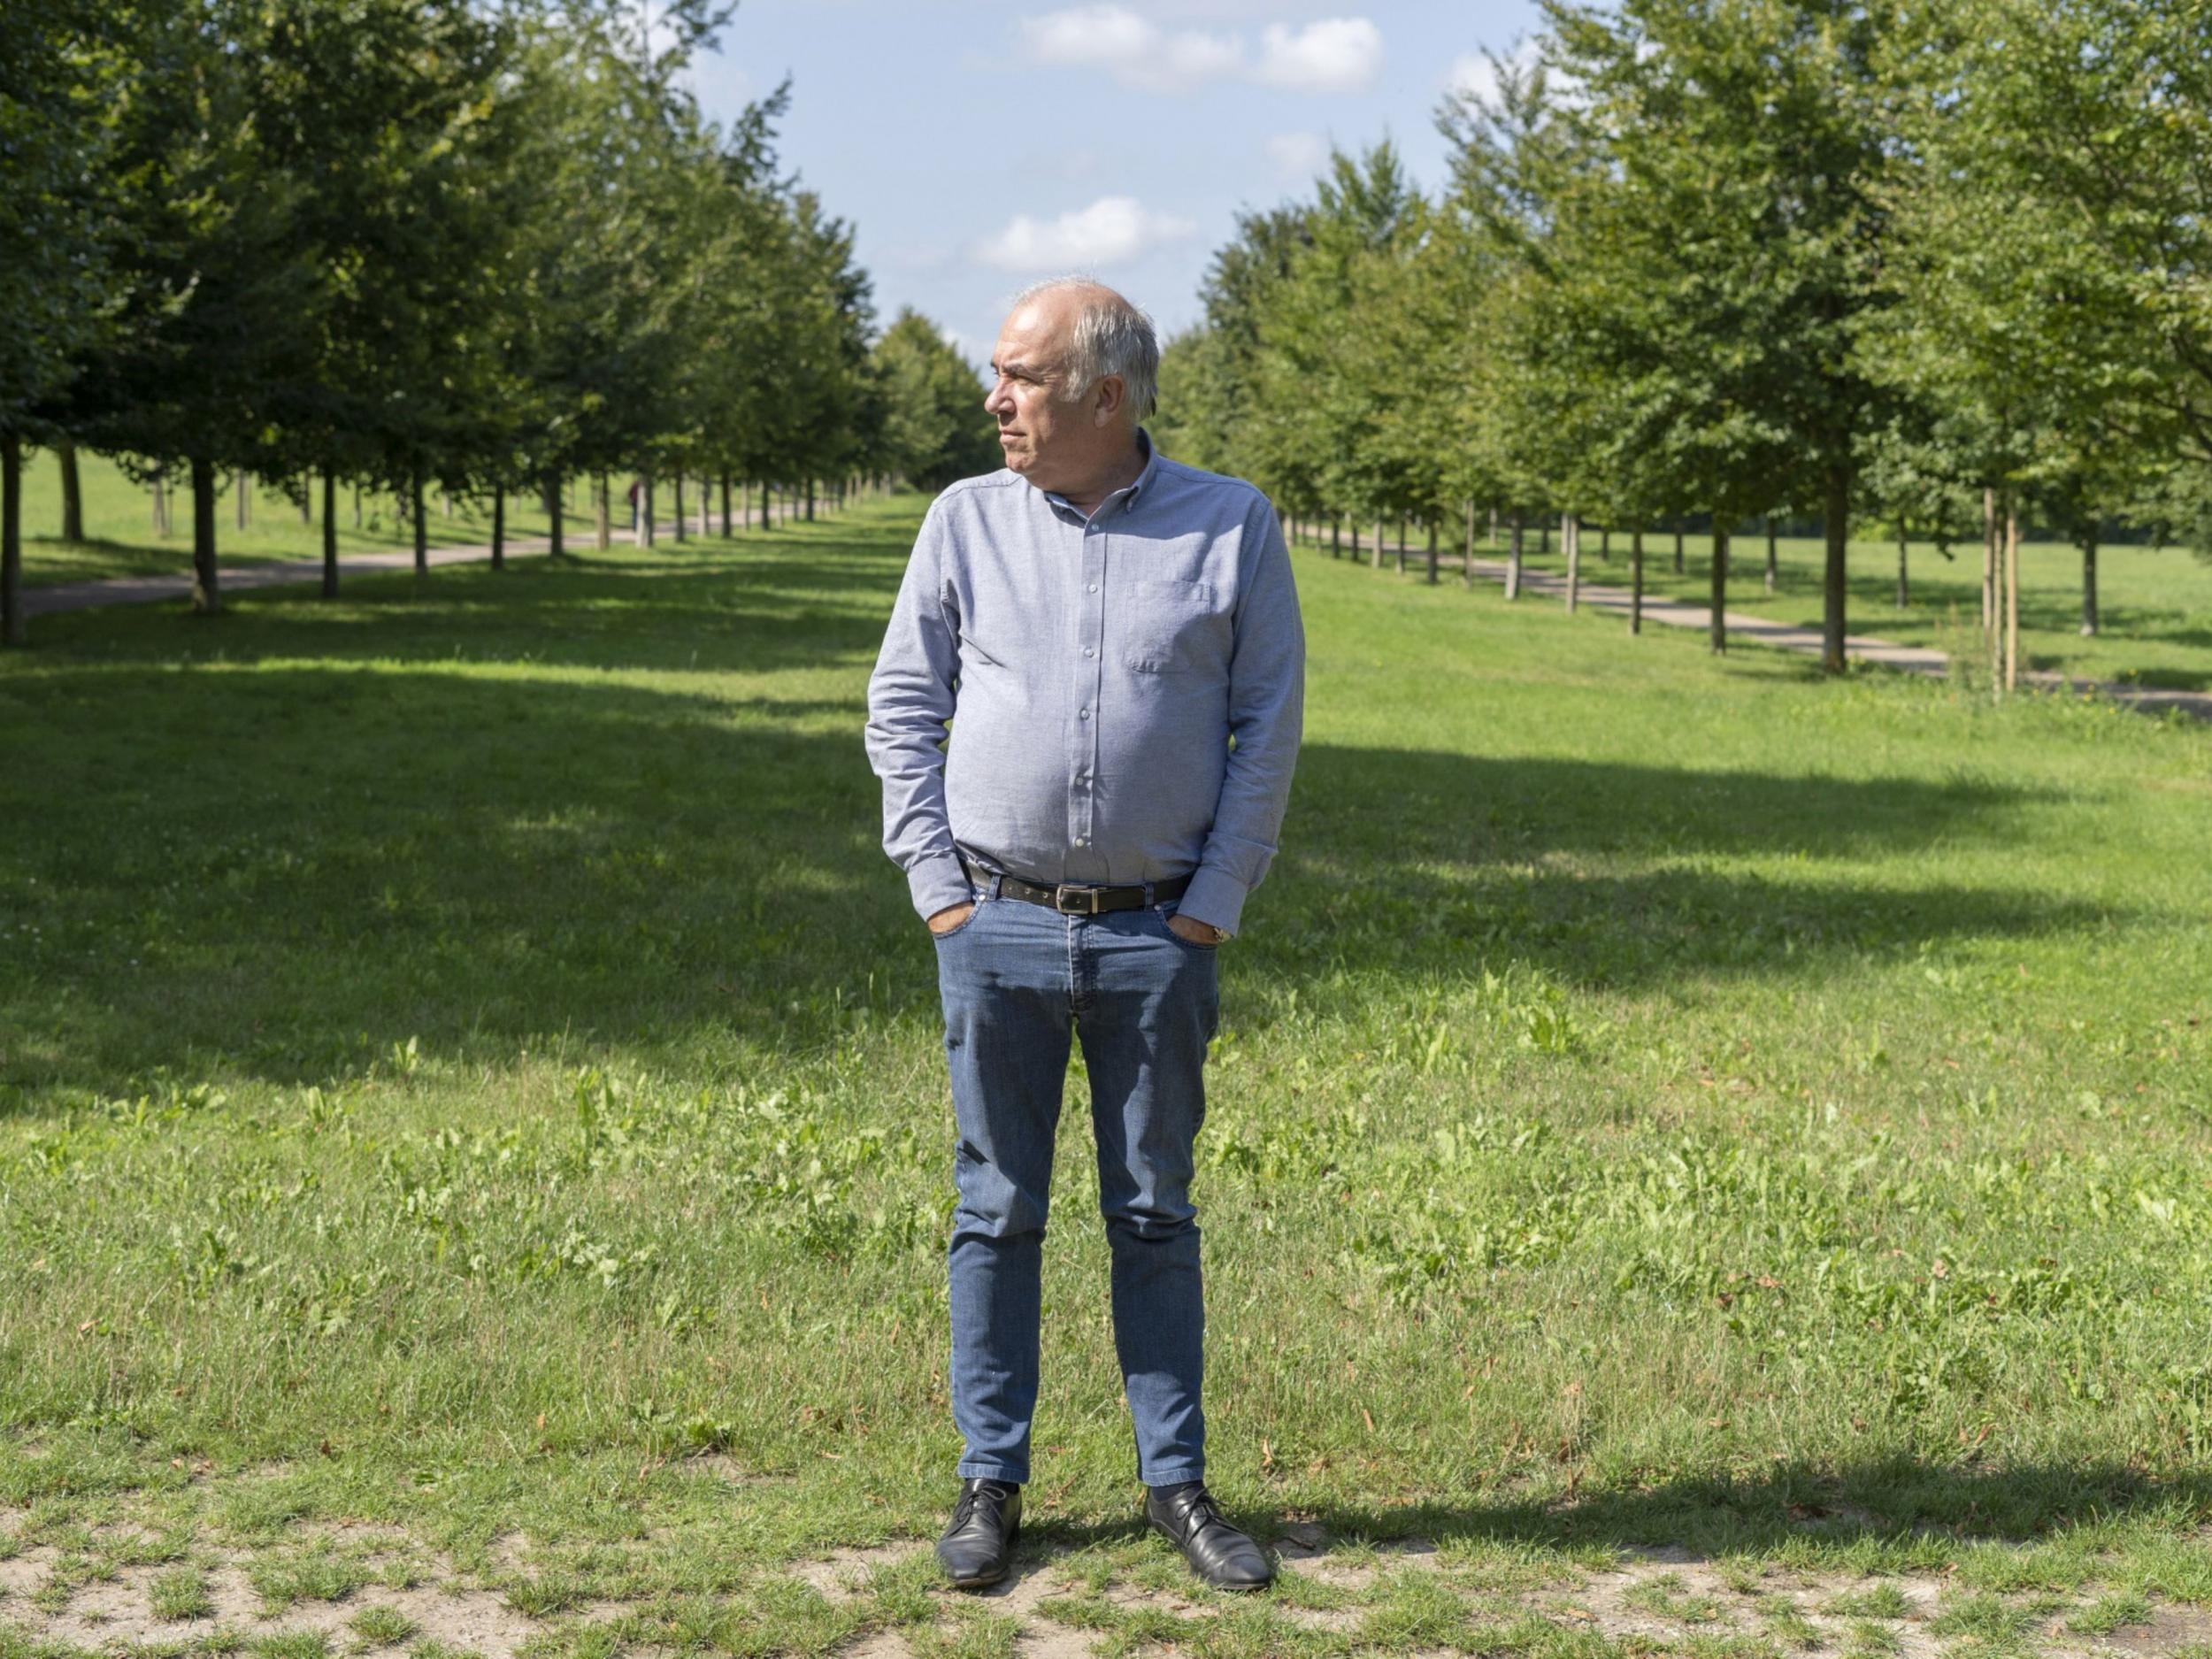 Head gardener Alain Baraton, between rows of trees at Versailles